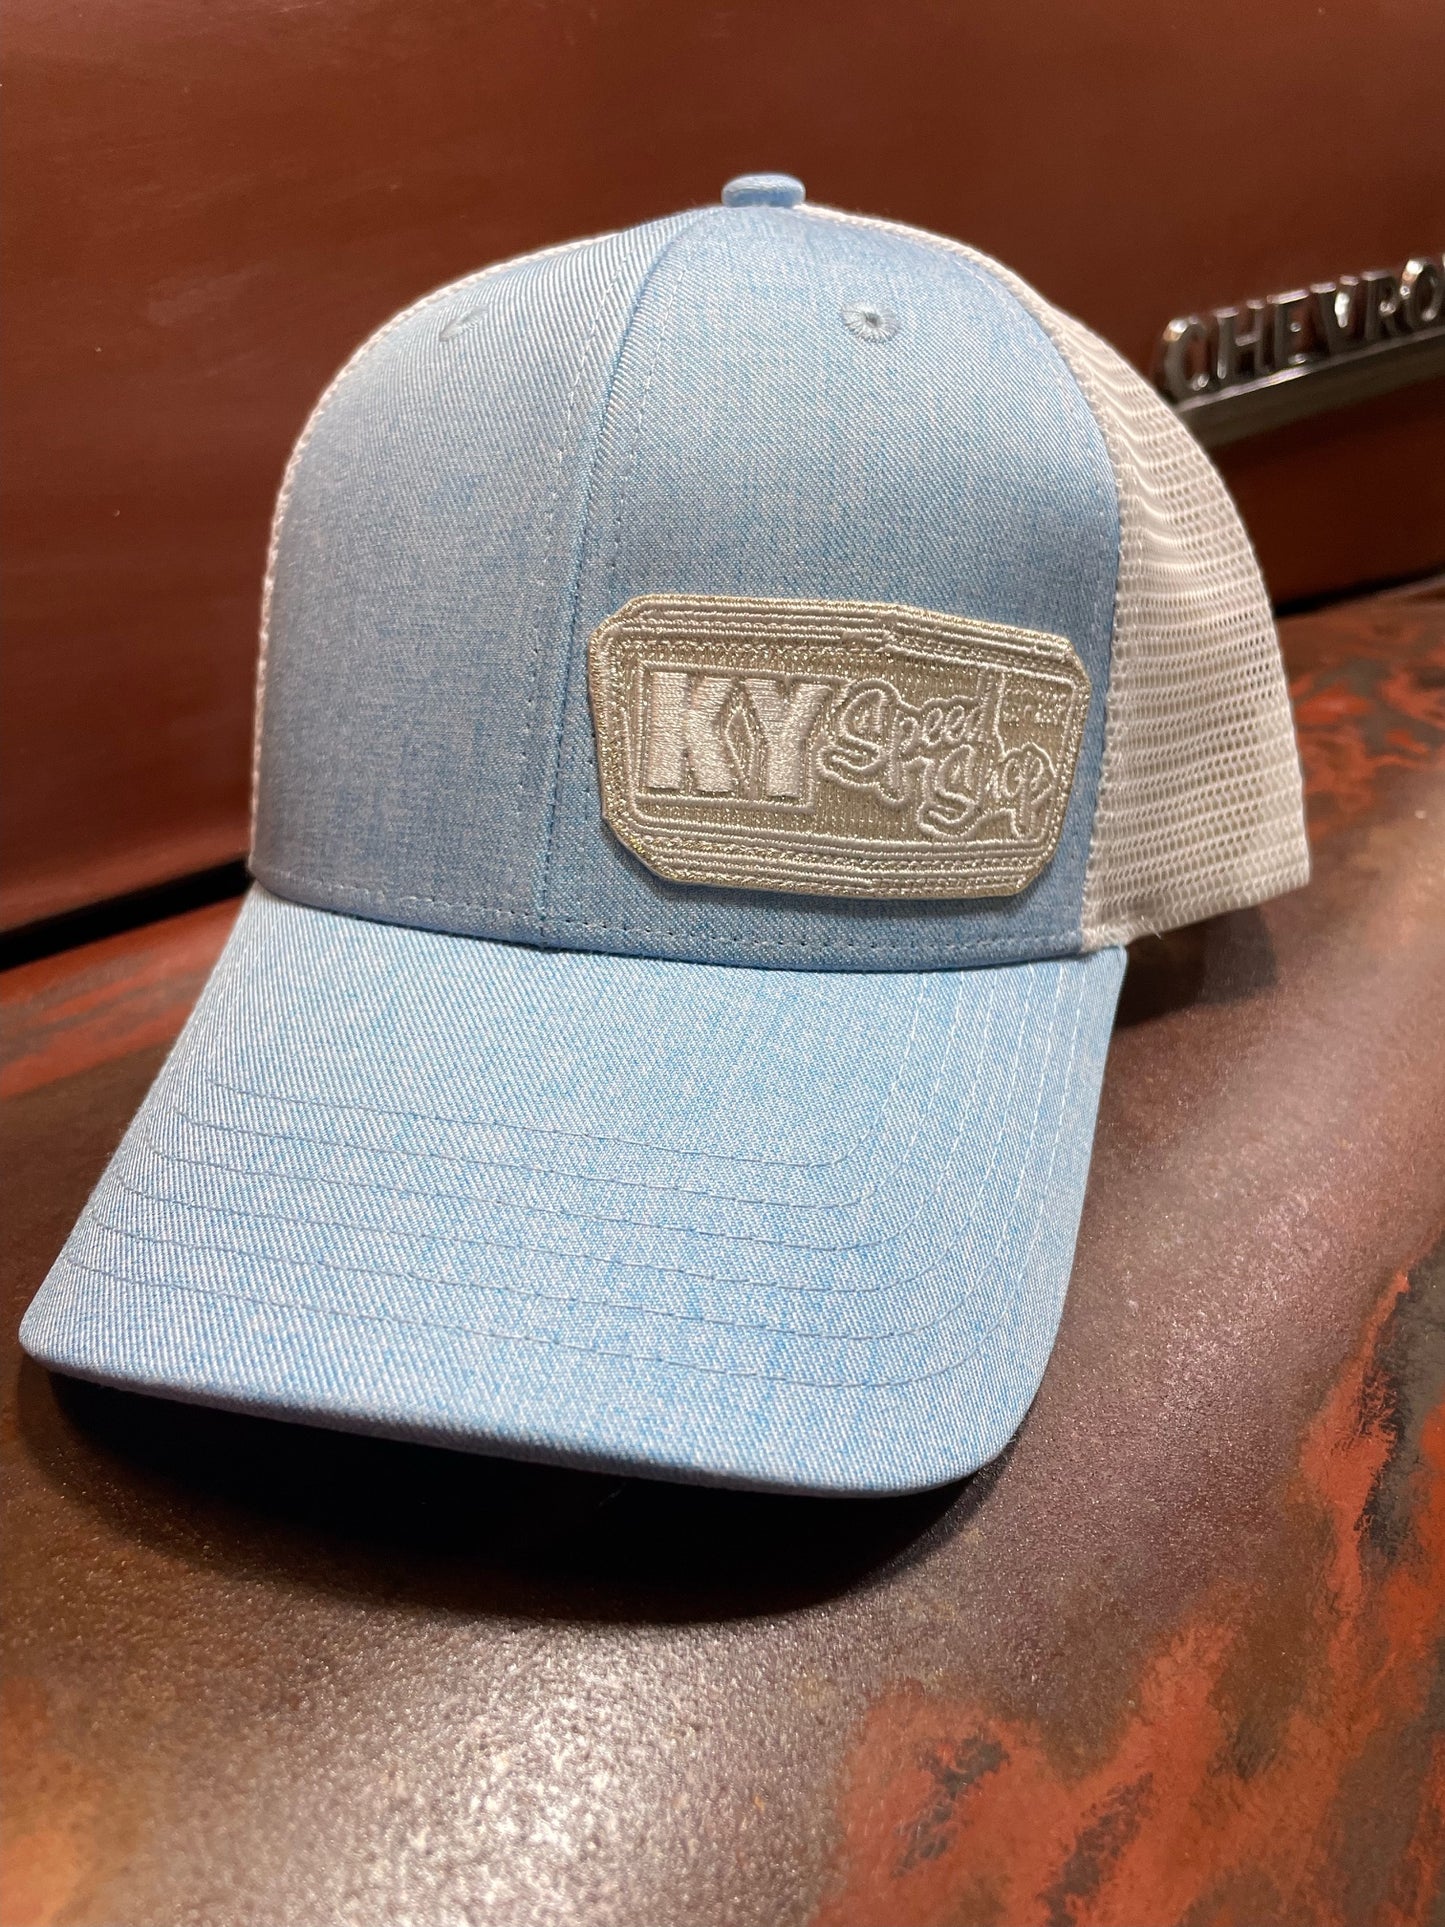 KYSS Ladies Ponytail Trucker Hat